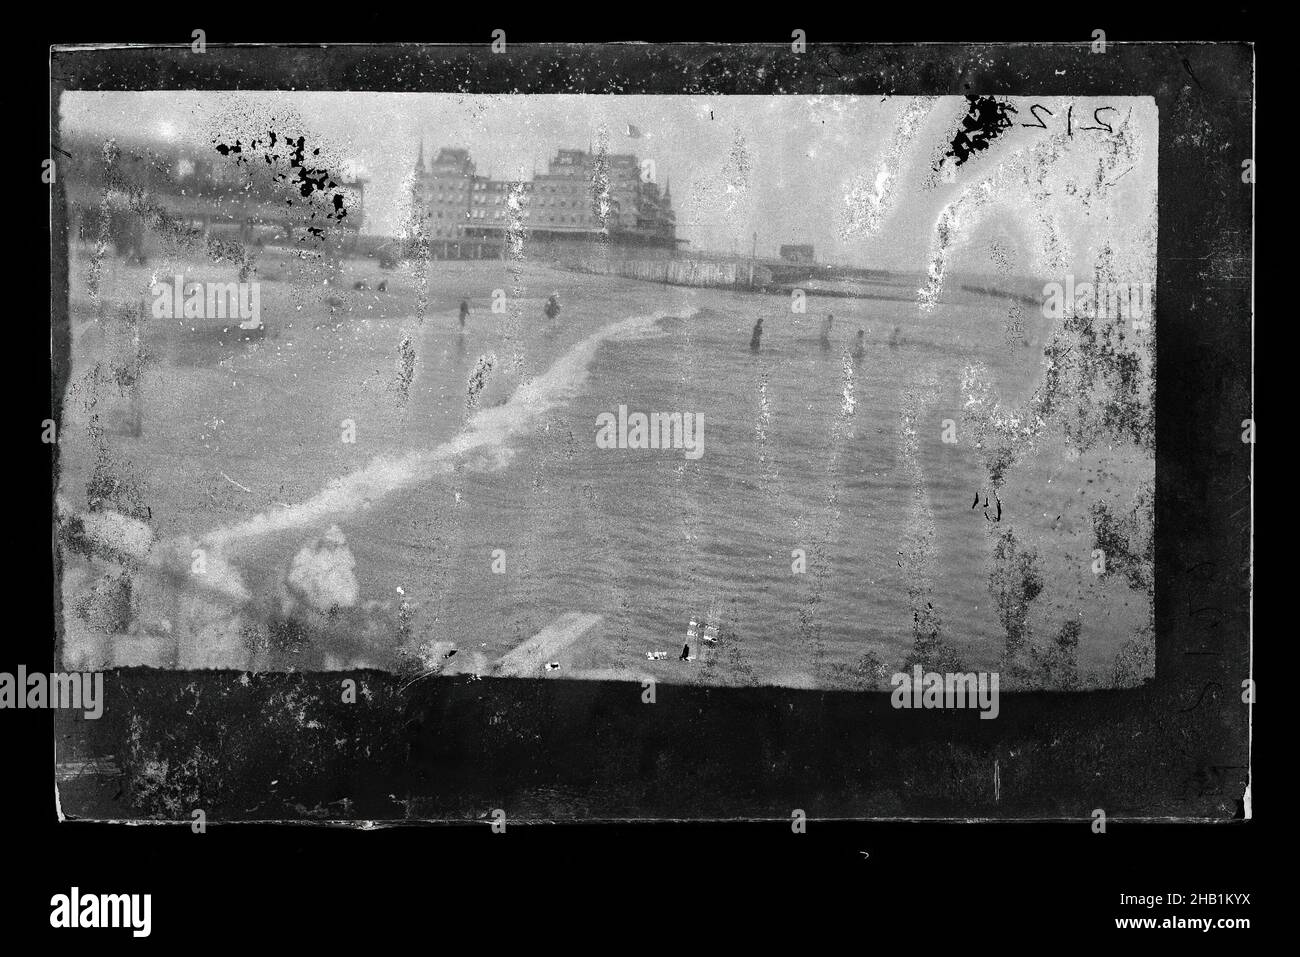 Manhattan Beach, Coney Island, Brooklyn, George Bradford Brainerd, norteamericano, 1845-1887, placa negativa seca, aprox. 1872-1887, 19th siglo, americano, playa, goers de playa, Brooklyn, medios dañados, Brooklyn histórico, viejo Brooklyn, muelle, orilla, frente al mar Foto de stock